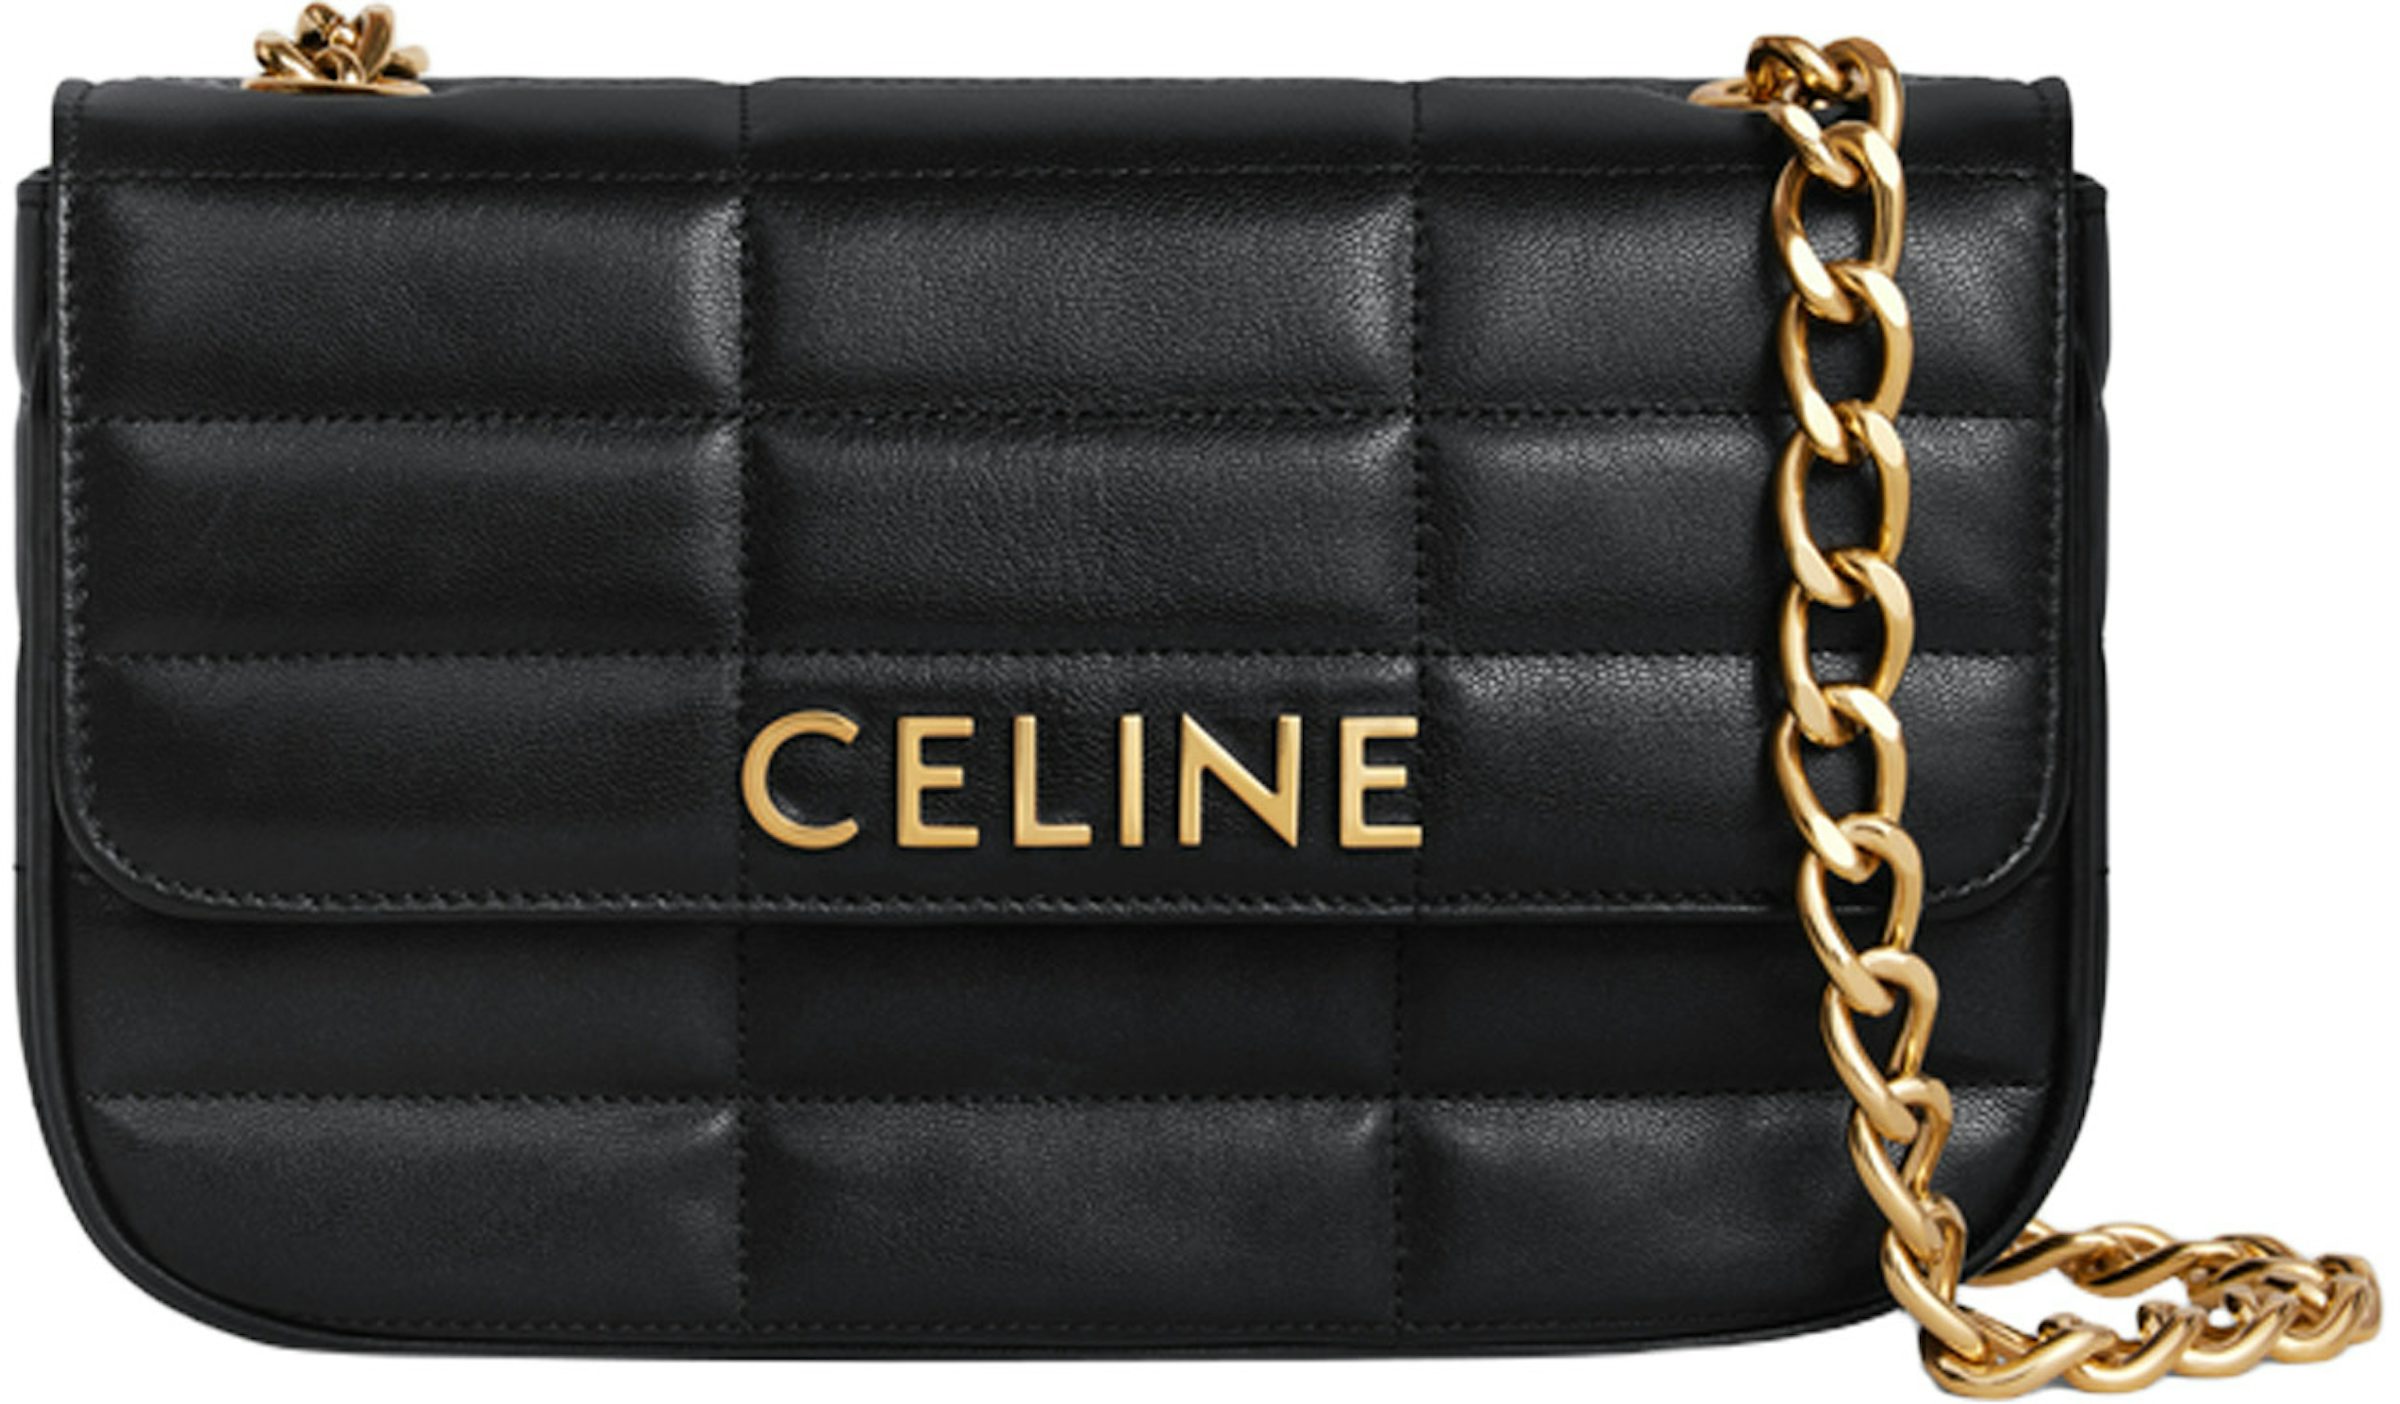 Celine Matelasse Chain Shoulder Bag Quilted Black in Goatskin with